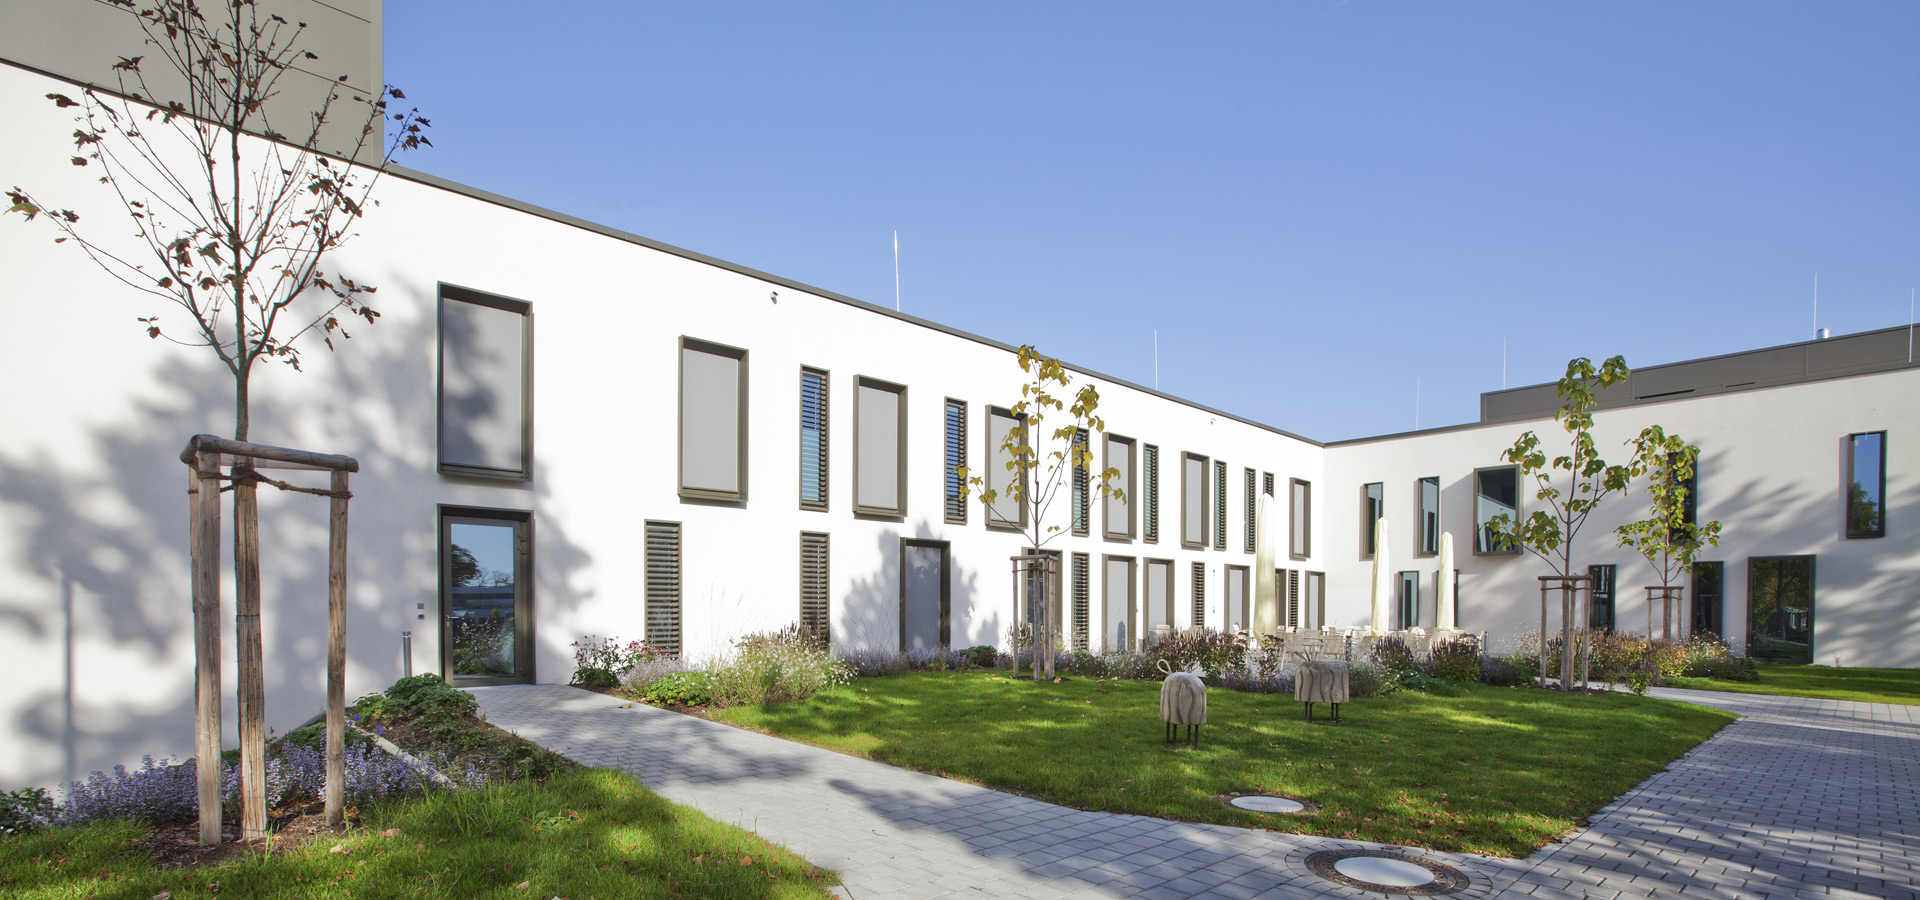 Gartenhof Ksters - St. Augustinus Klinik, Neuss